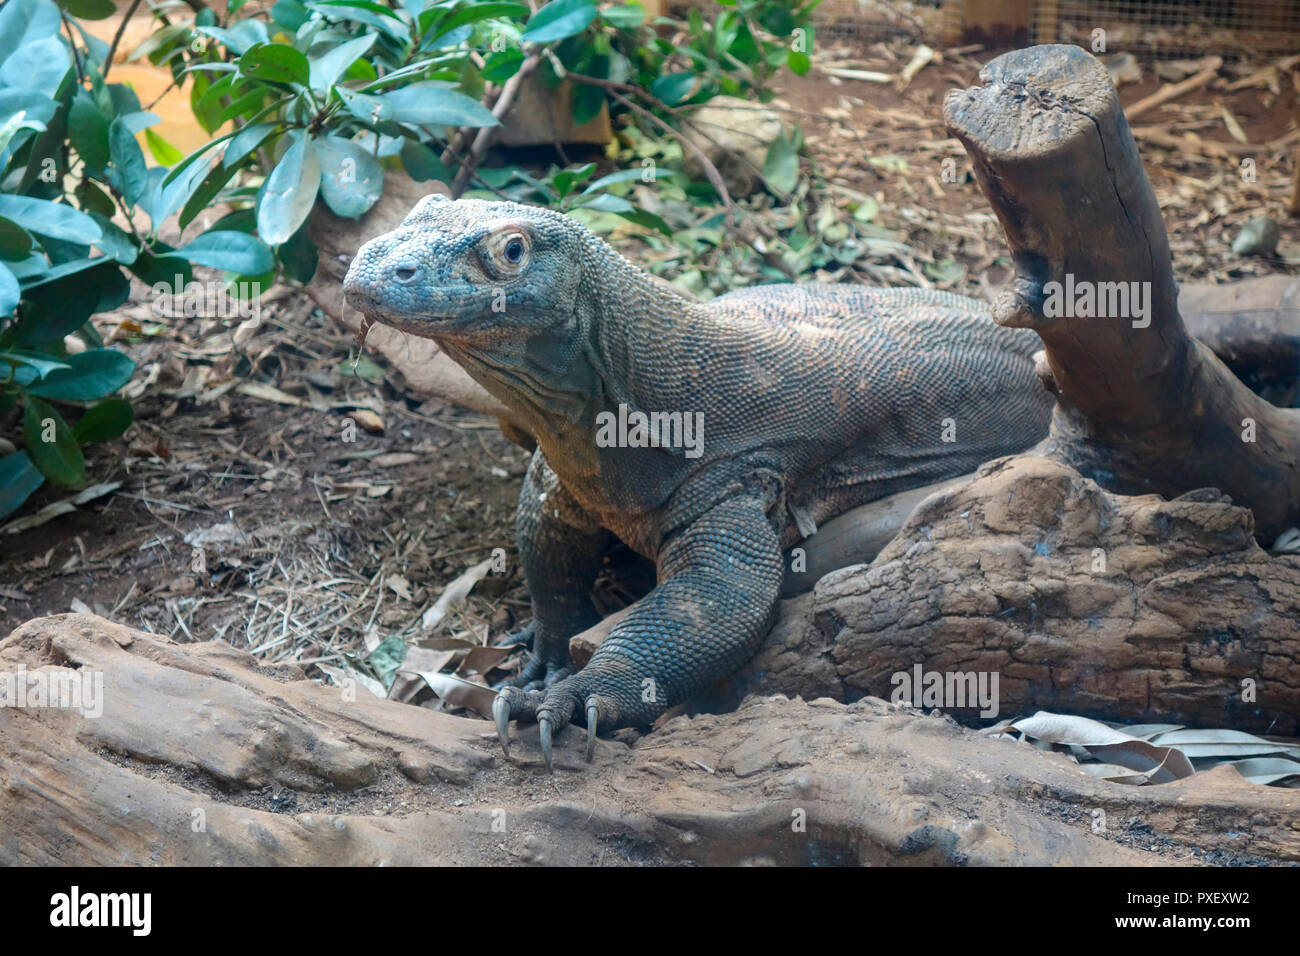 A Komodo Dragon at ZSL London Zoo. Stock Photo